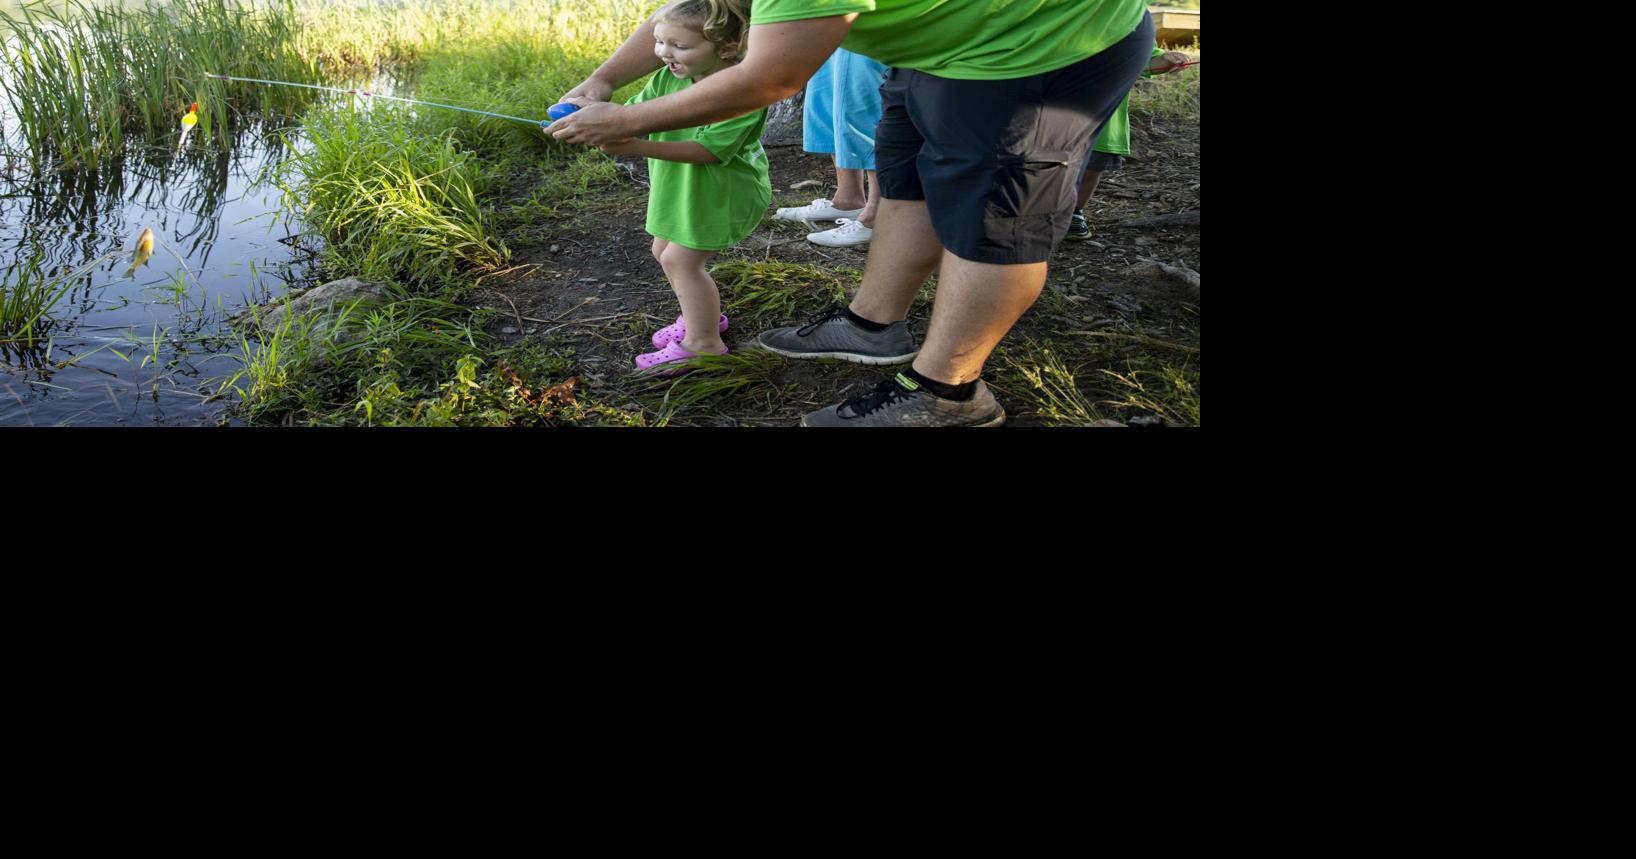 Spotsylvania derby gets kids hooked on fishing